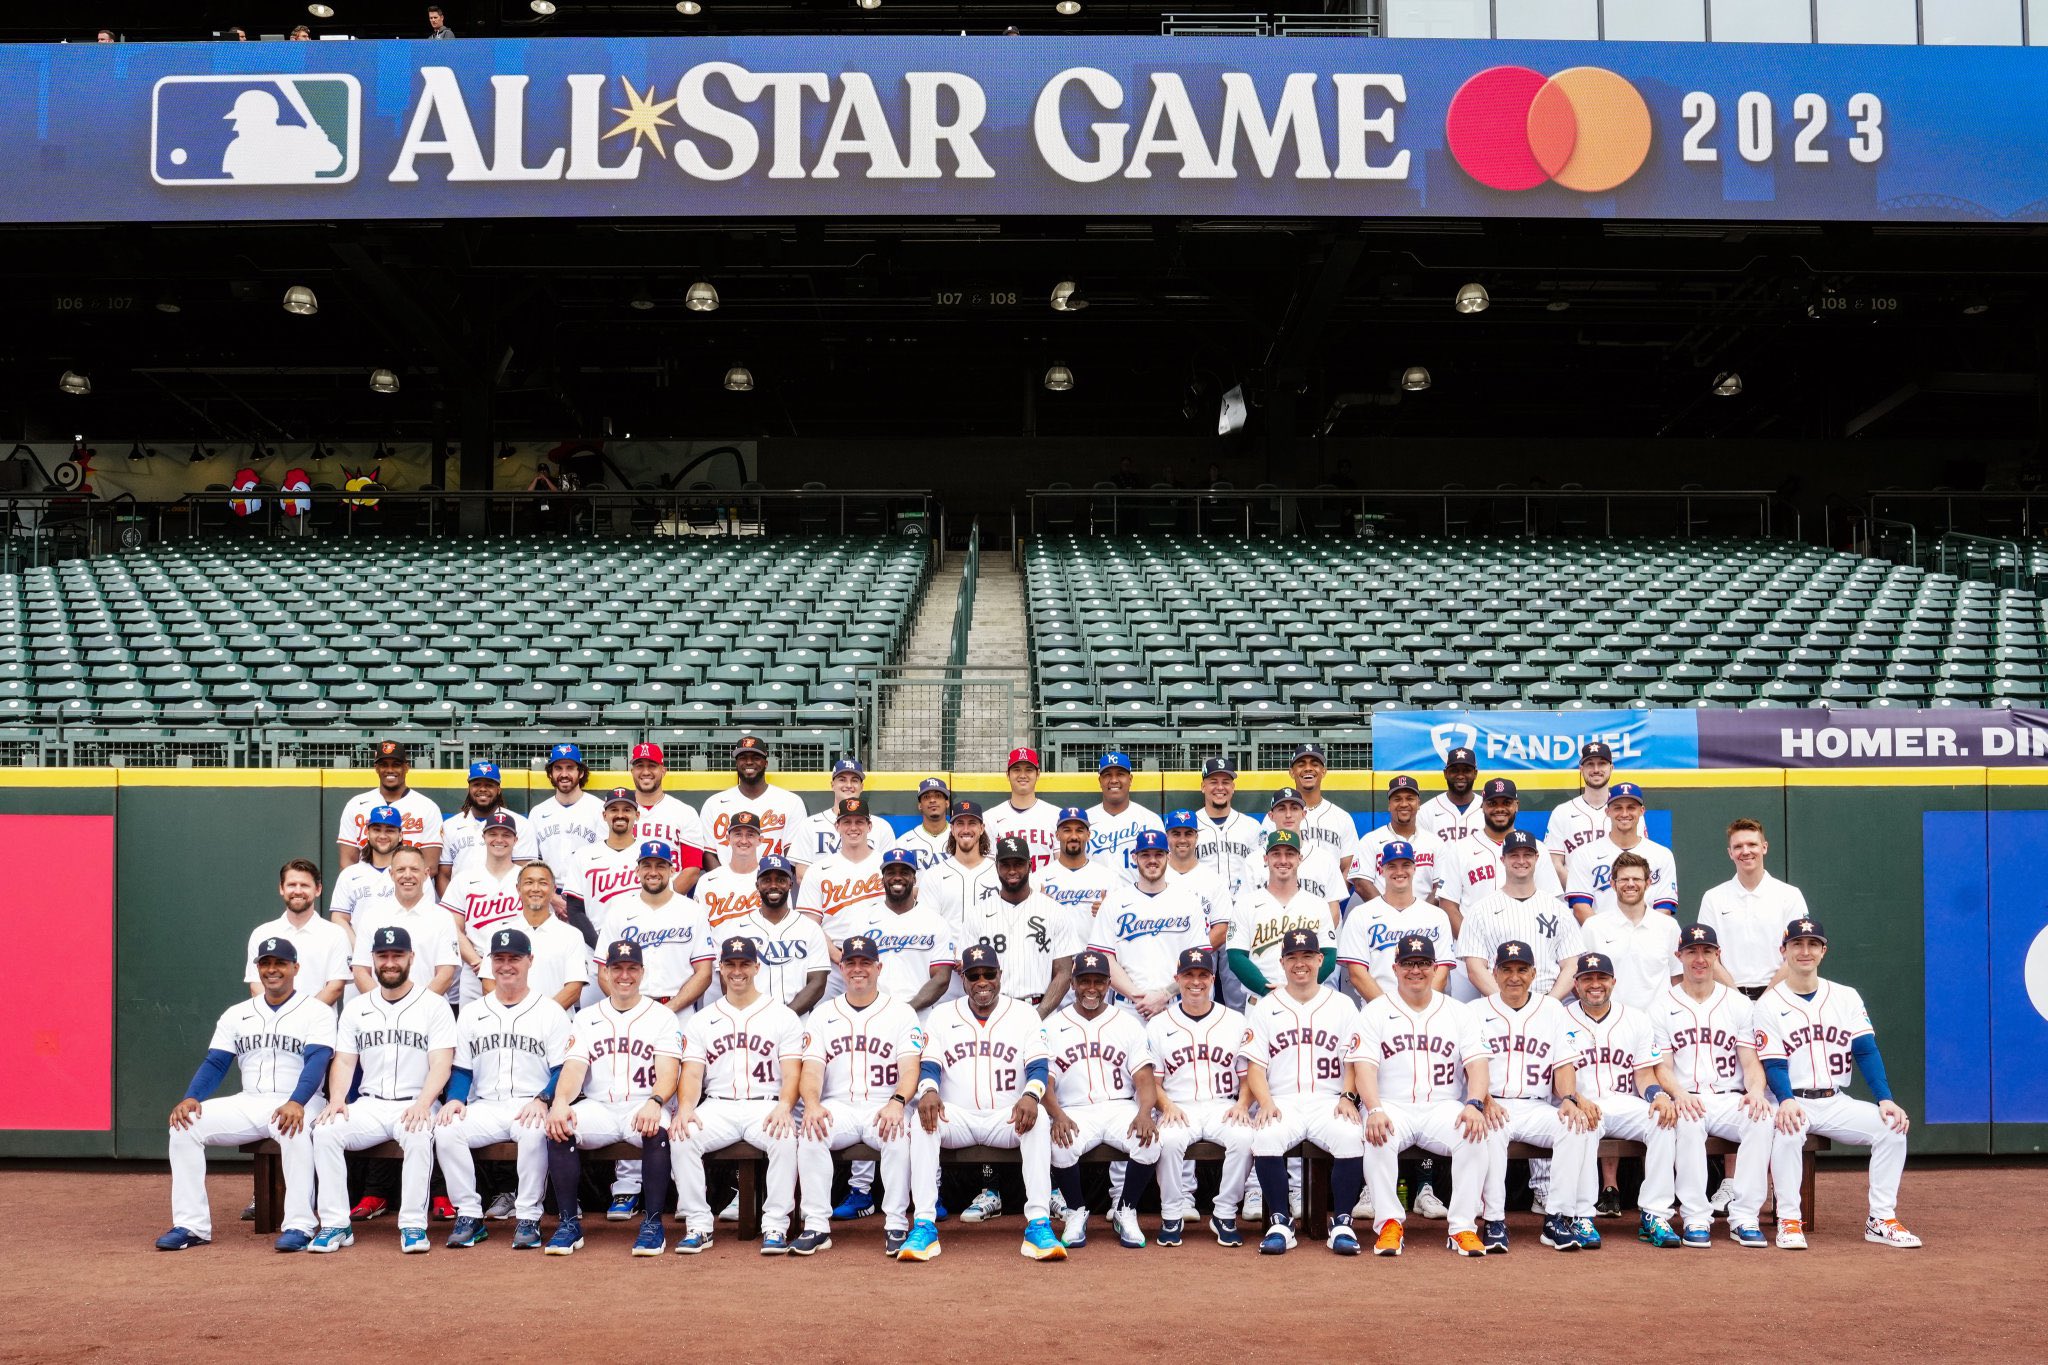 Toronto Blue Jays on X: Your 2023 American League All-Star Team